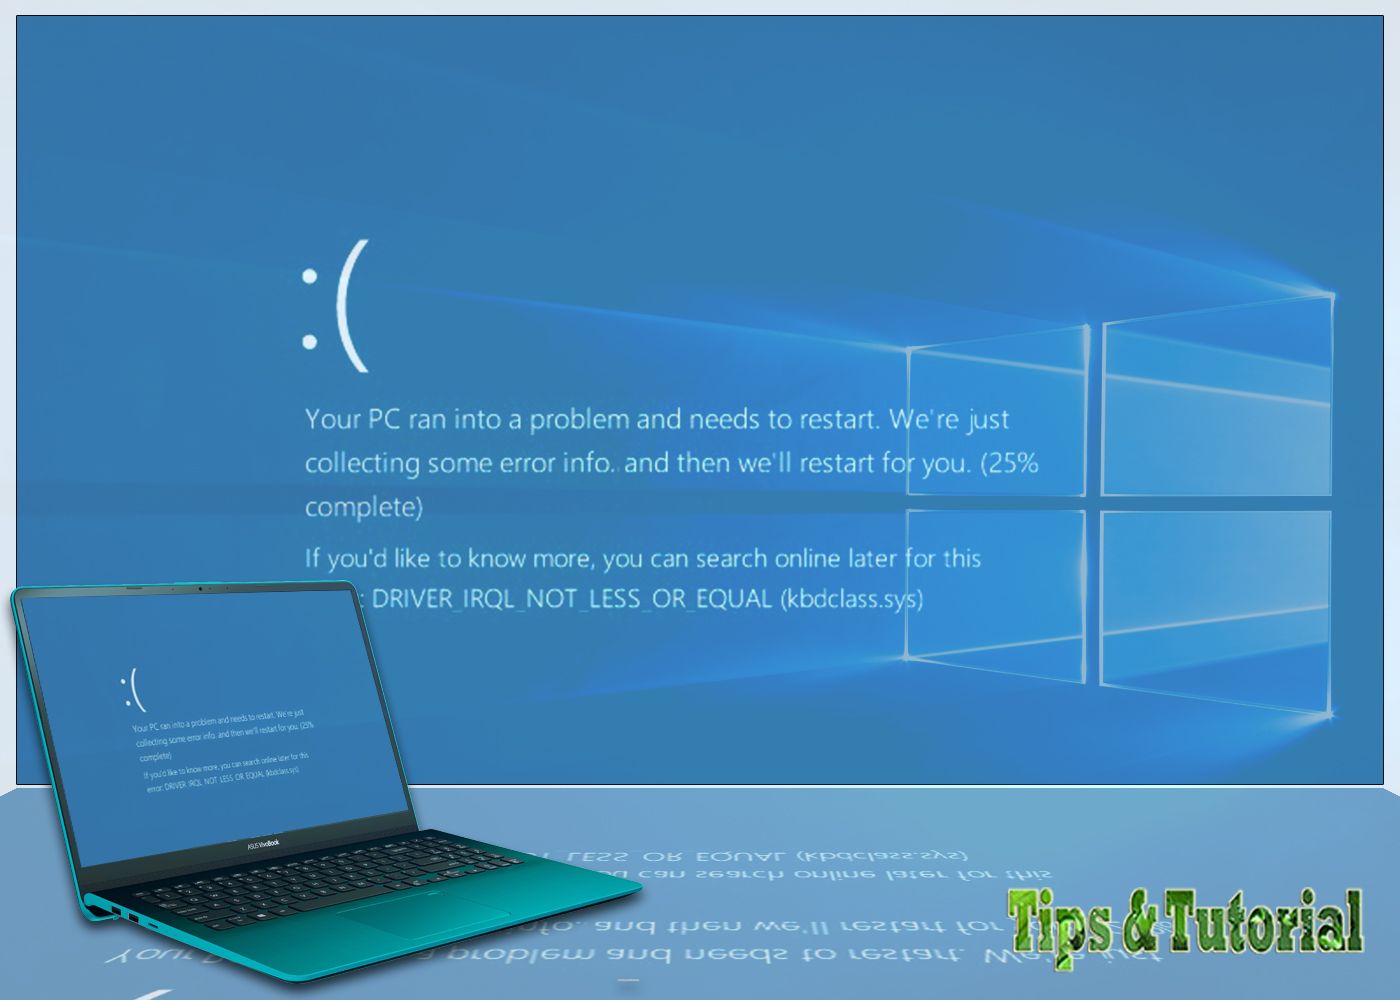 Irql not less or equal windows 10 синий экран: как исправить ошибку, 9 шагов